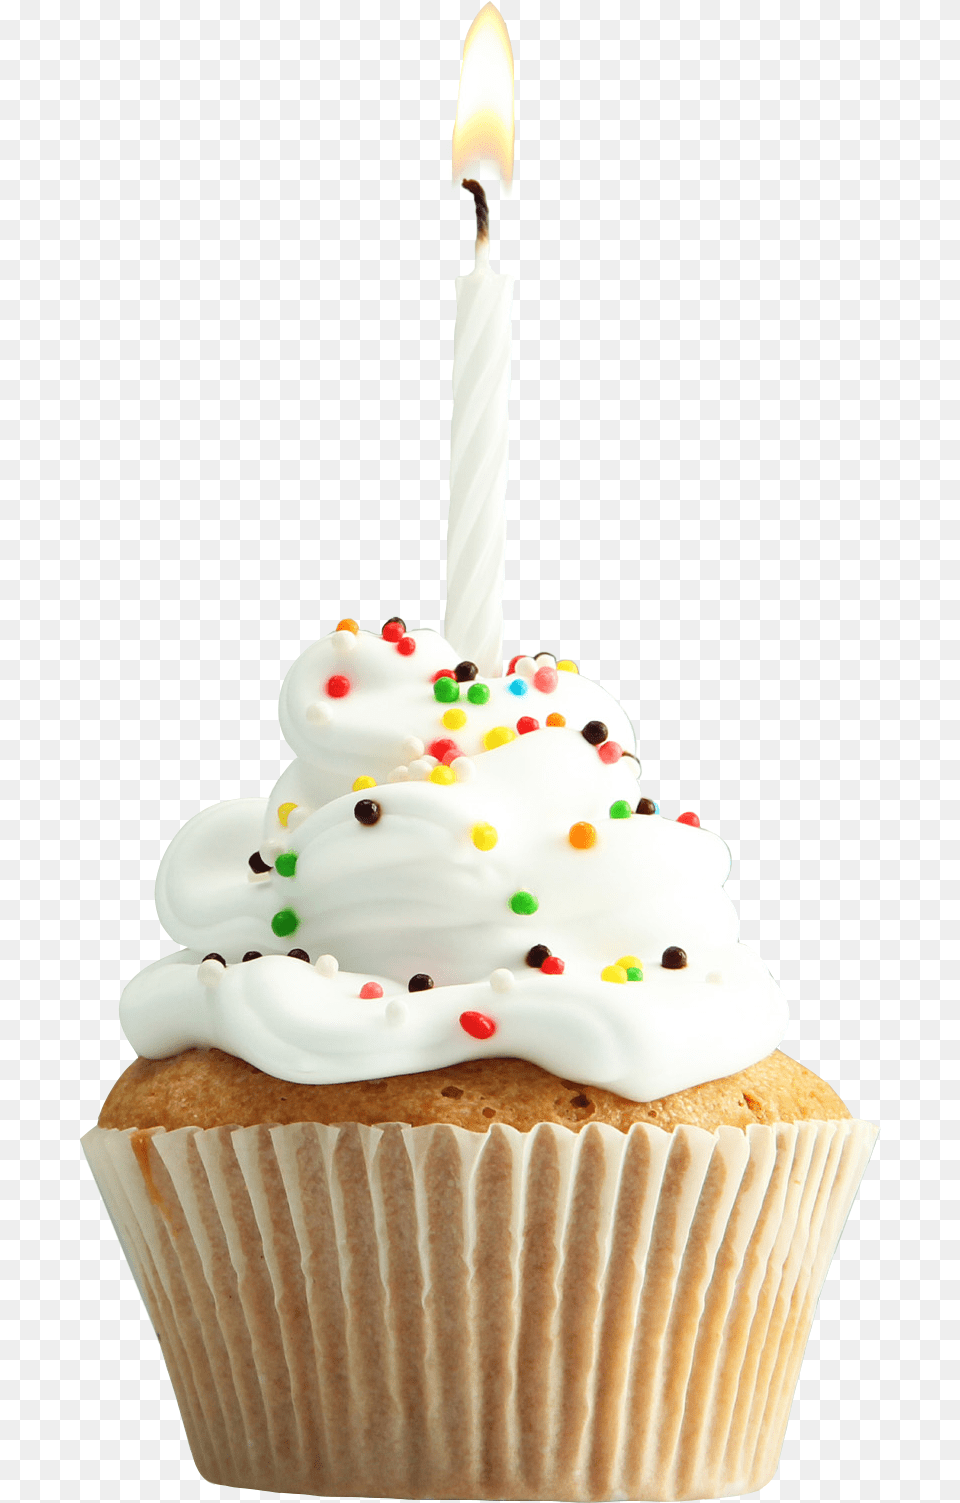 Cupcake Muffin Tart Torte Birthday Cake Transparent Background Birthday Cupcake, Birthday Cake, Cream, Dessert, Food Png